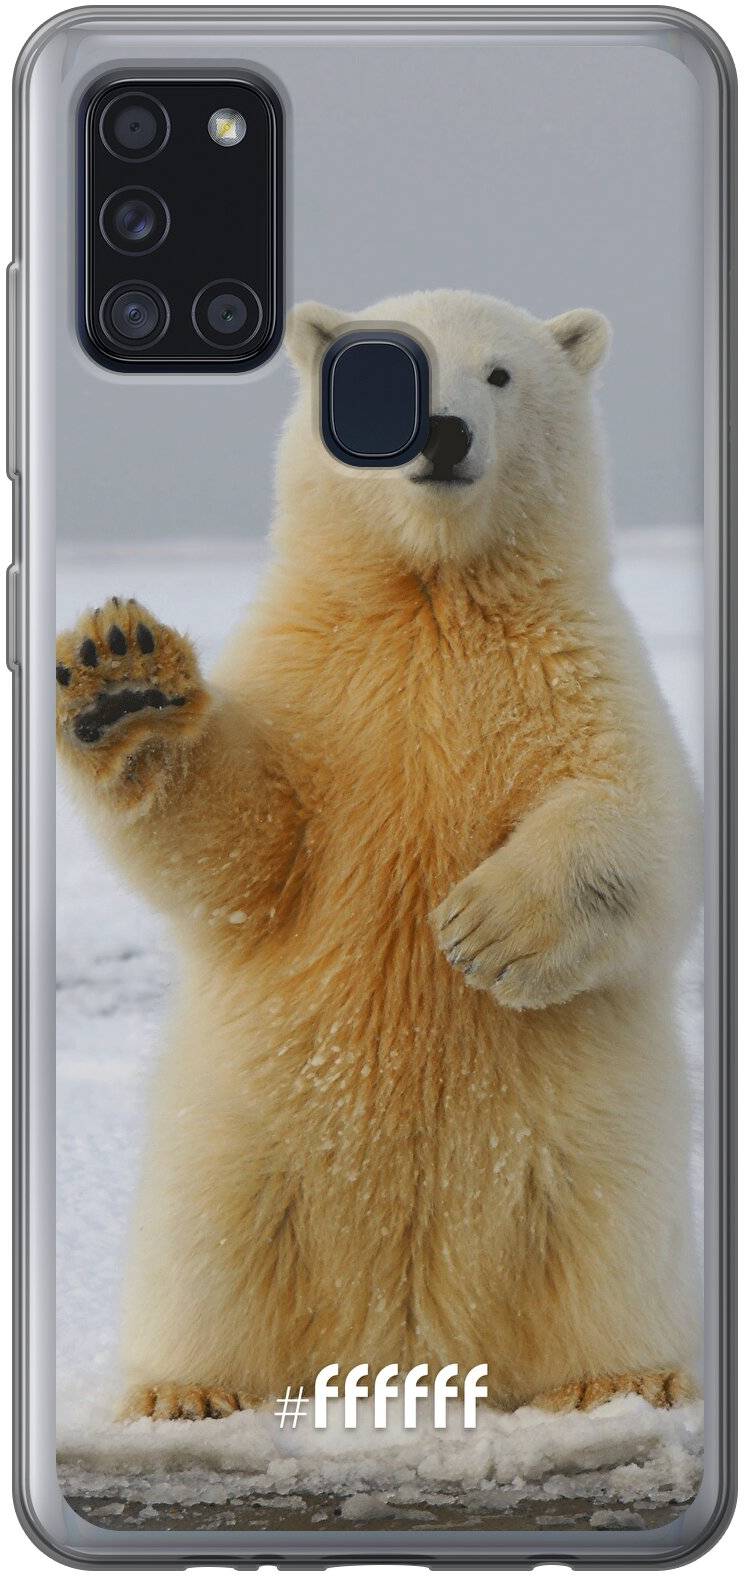 Polar Bear Galaxy A21s